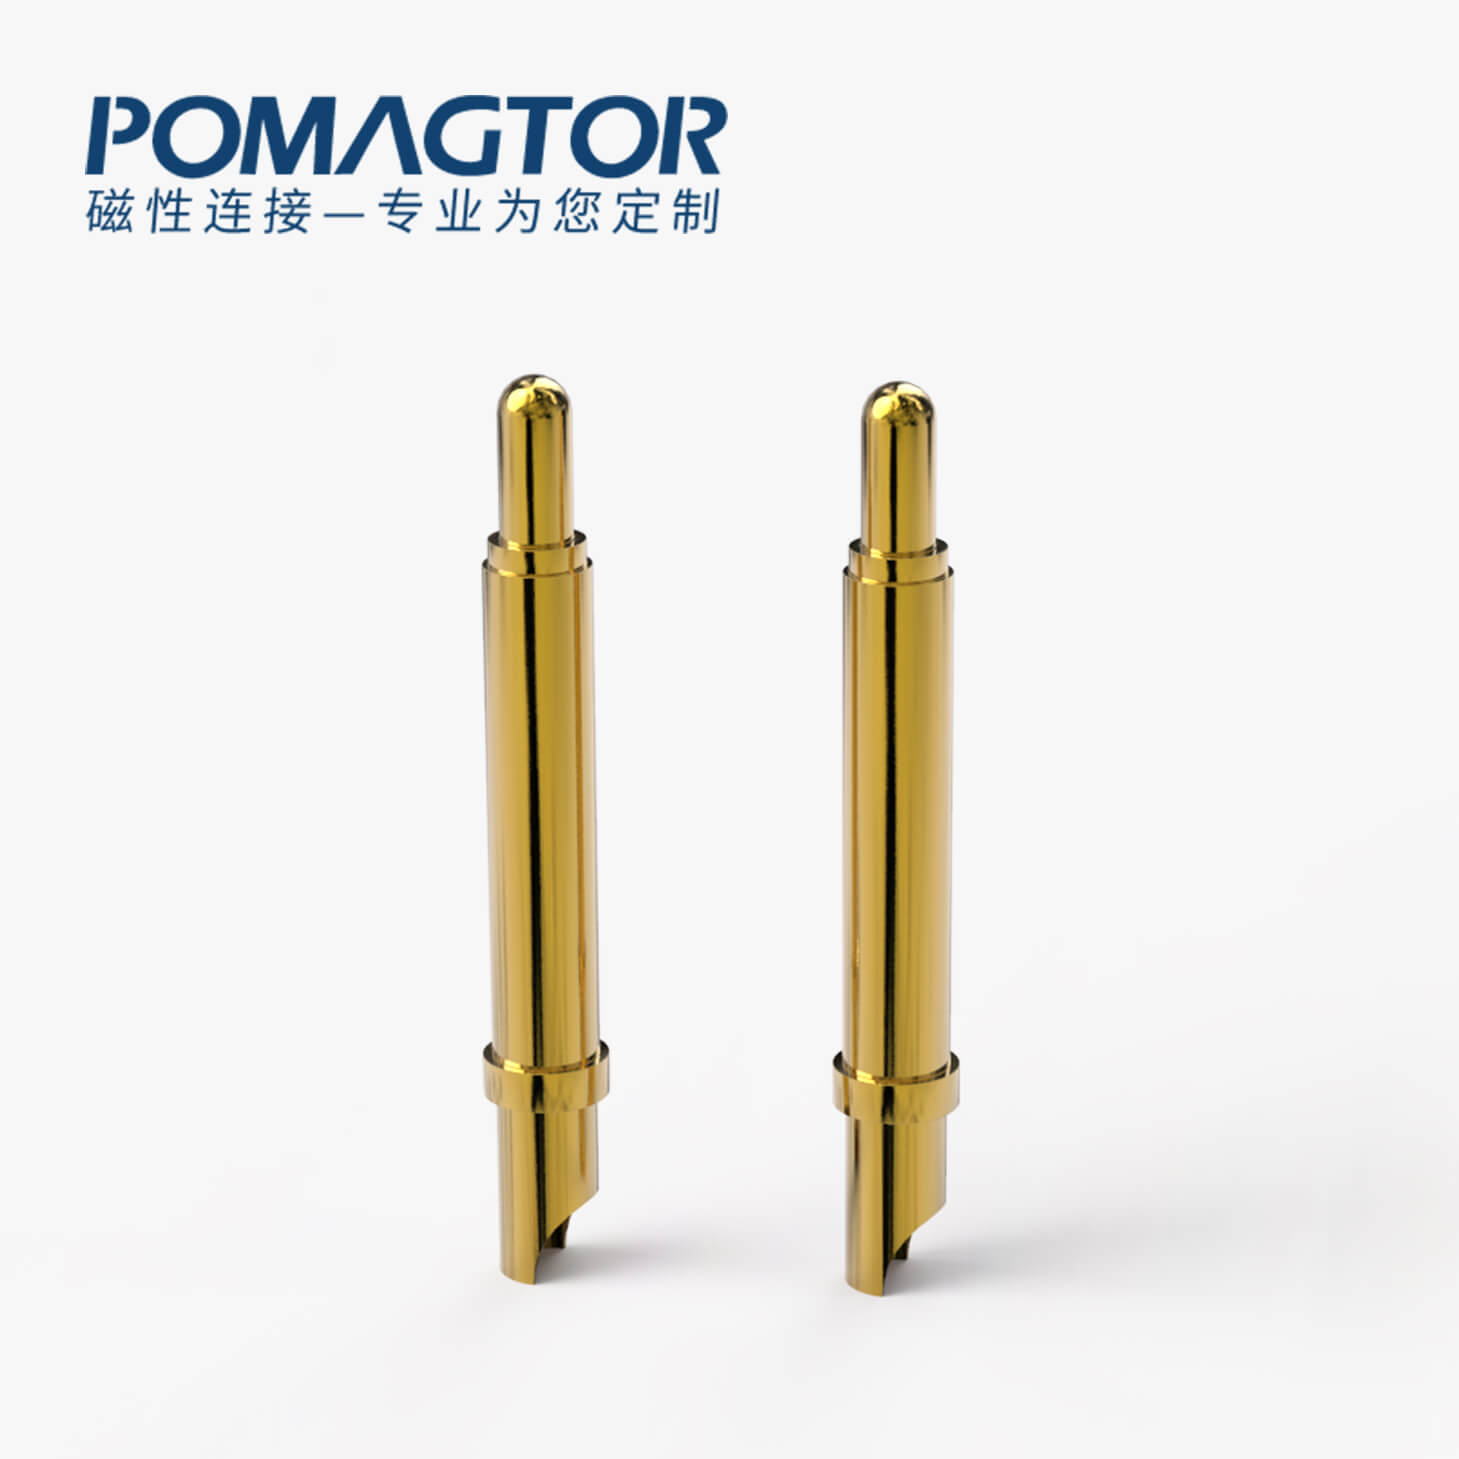 POGO PIN 焊线式：电镀黄铜Au50u，电流3A，工作行程1.5mm:140±20gf，弹力50000次+，工作温度-30°~85°